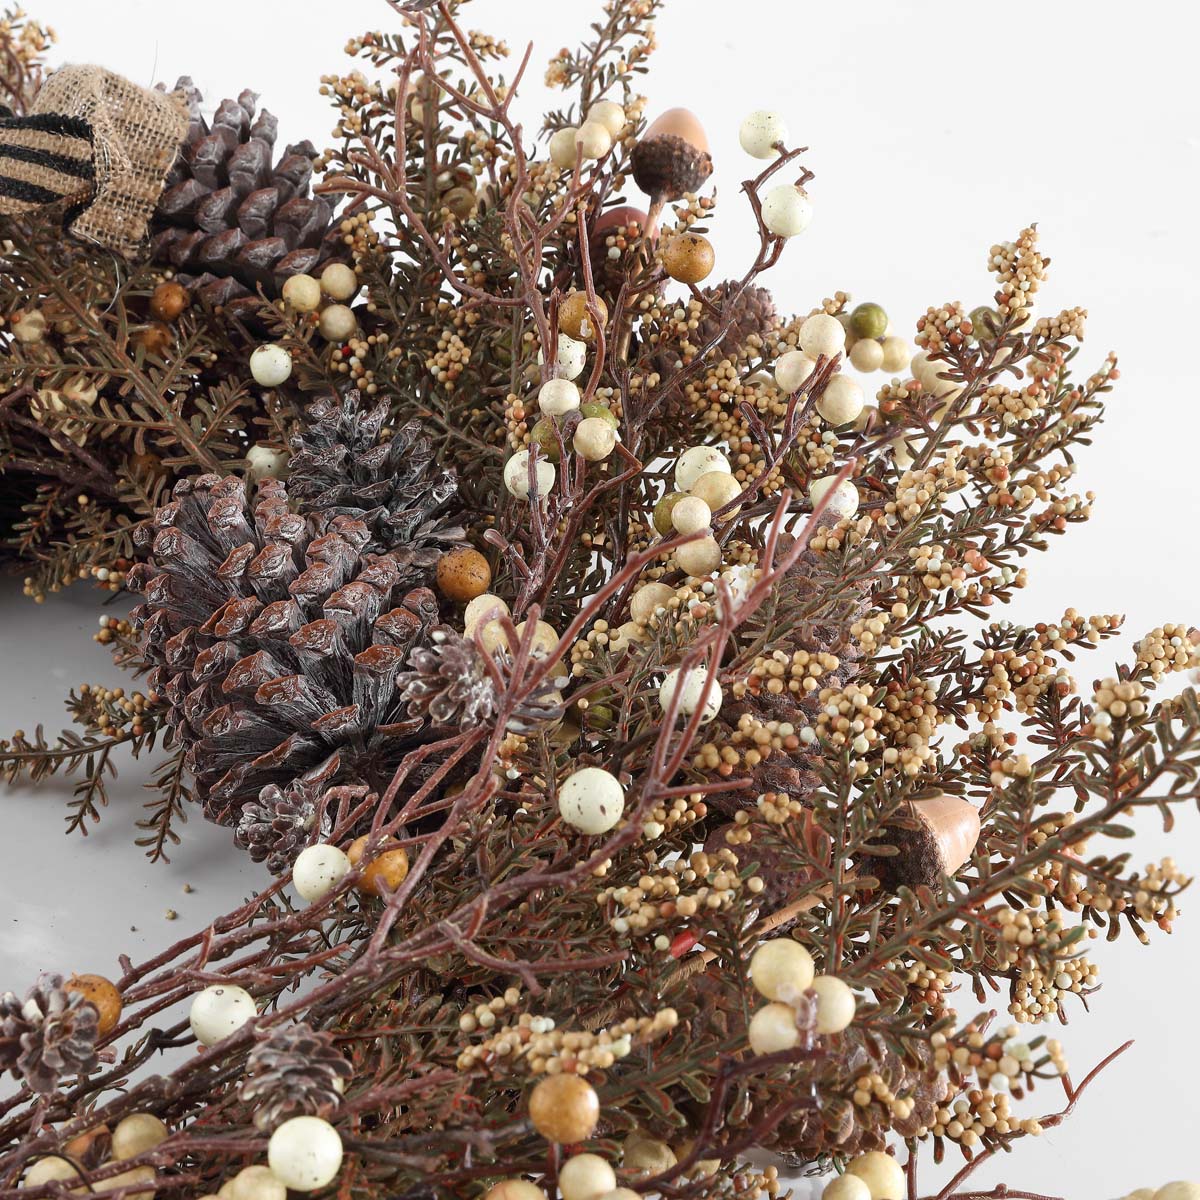 Safavieh Faux 31 Inch Berry & Pine Cone Wreath W/ Bow , FXP1055